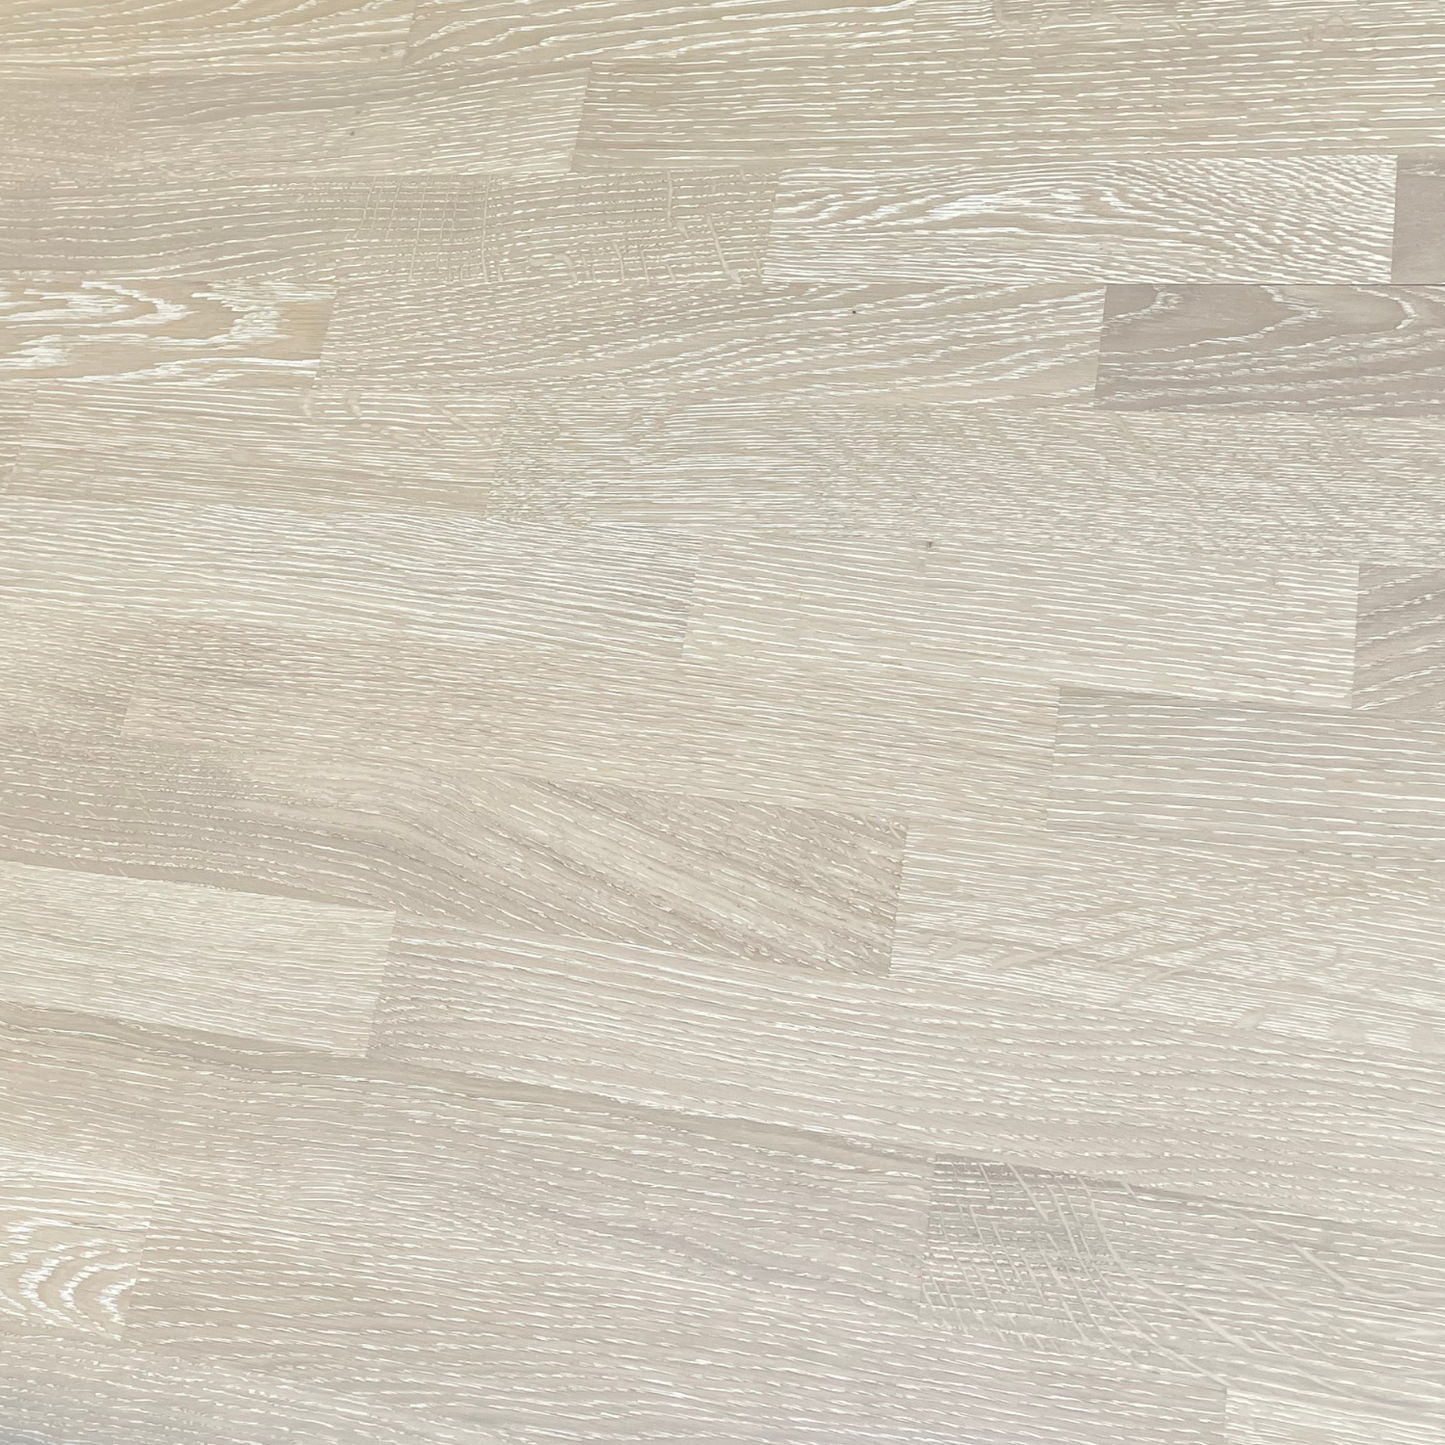 7 1/5" x 1/2" 3 Strip Design Engineered Oak Ivory & Cream Stain Hardwood Flooring